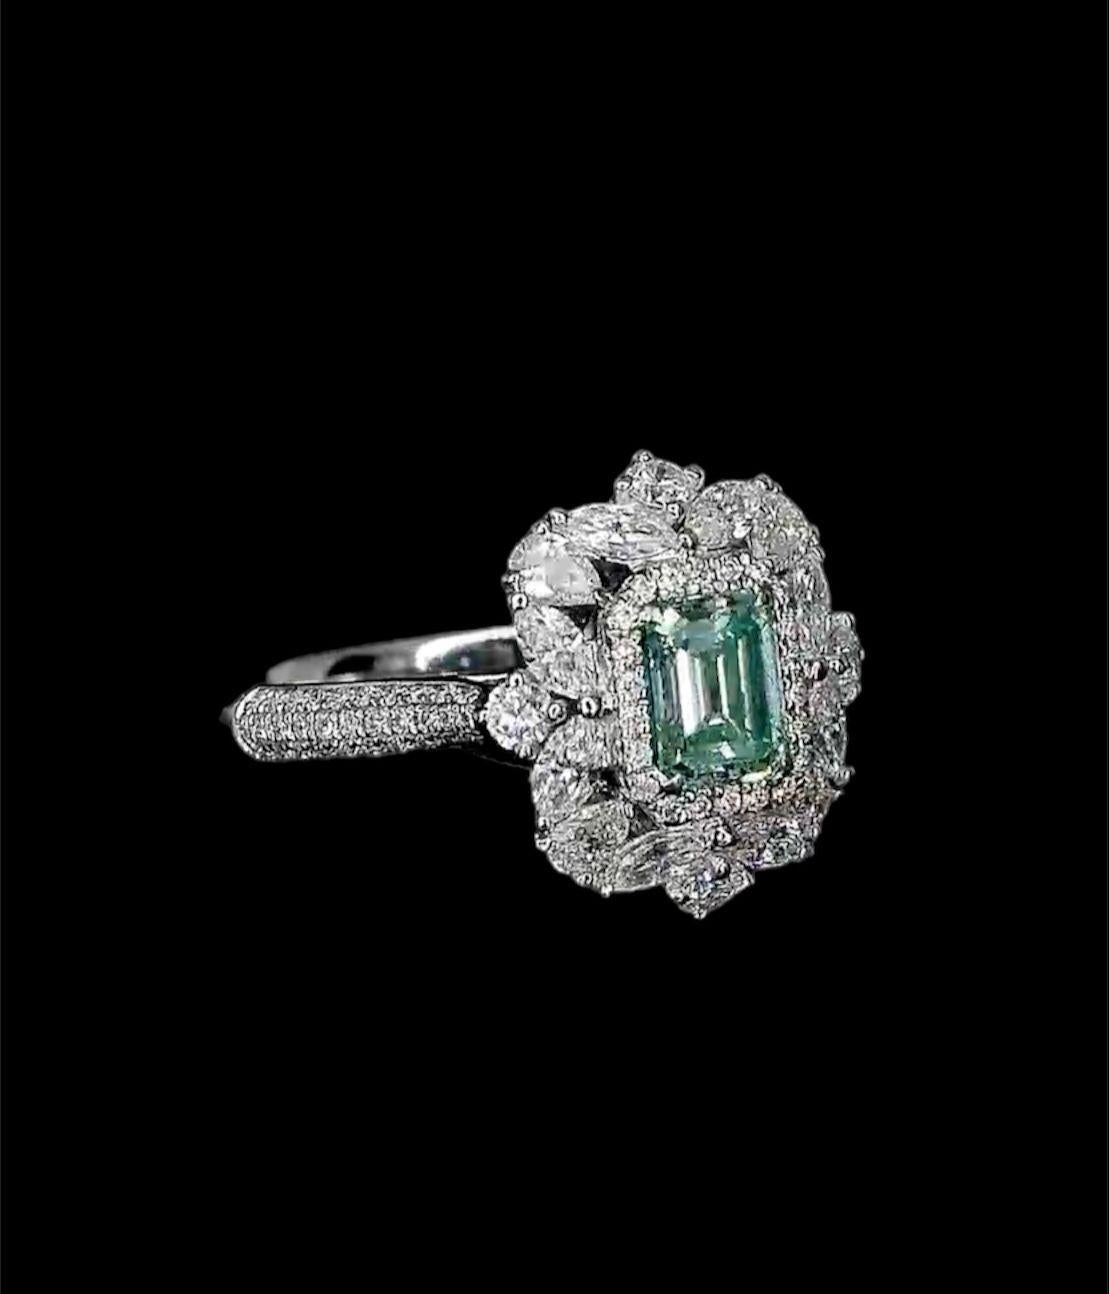 Emerald Cut 0.72 Carat Faint Yellow Green Diamond Ring SI1 Clarity GIA Certified For Sale